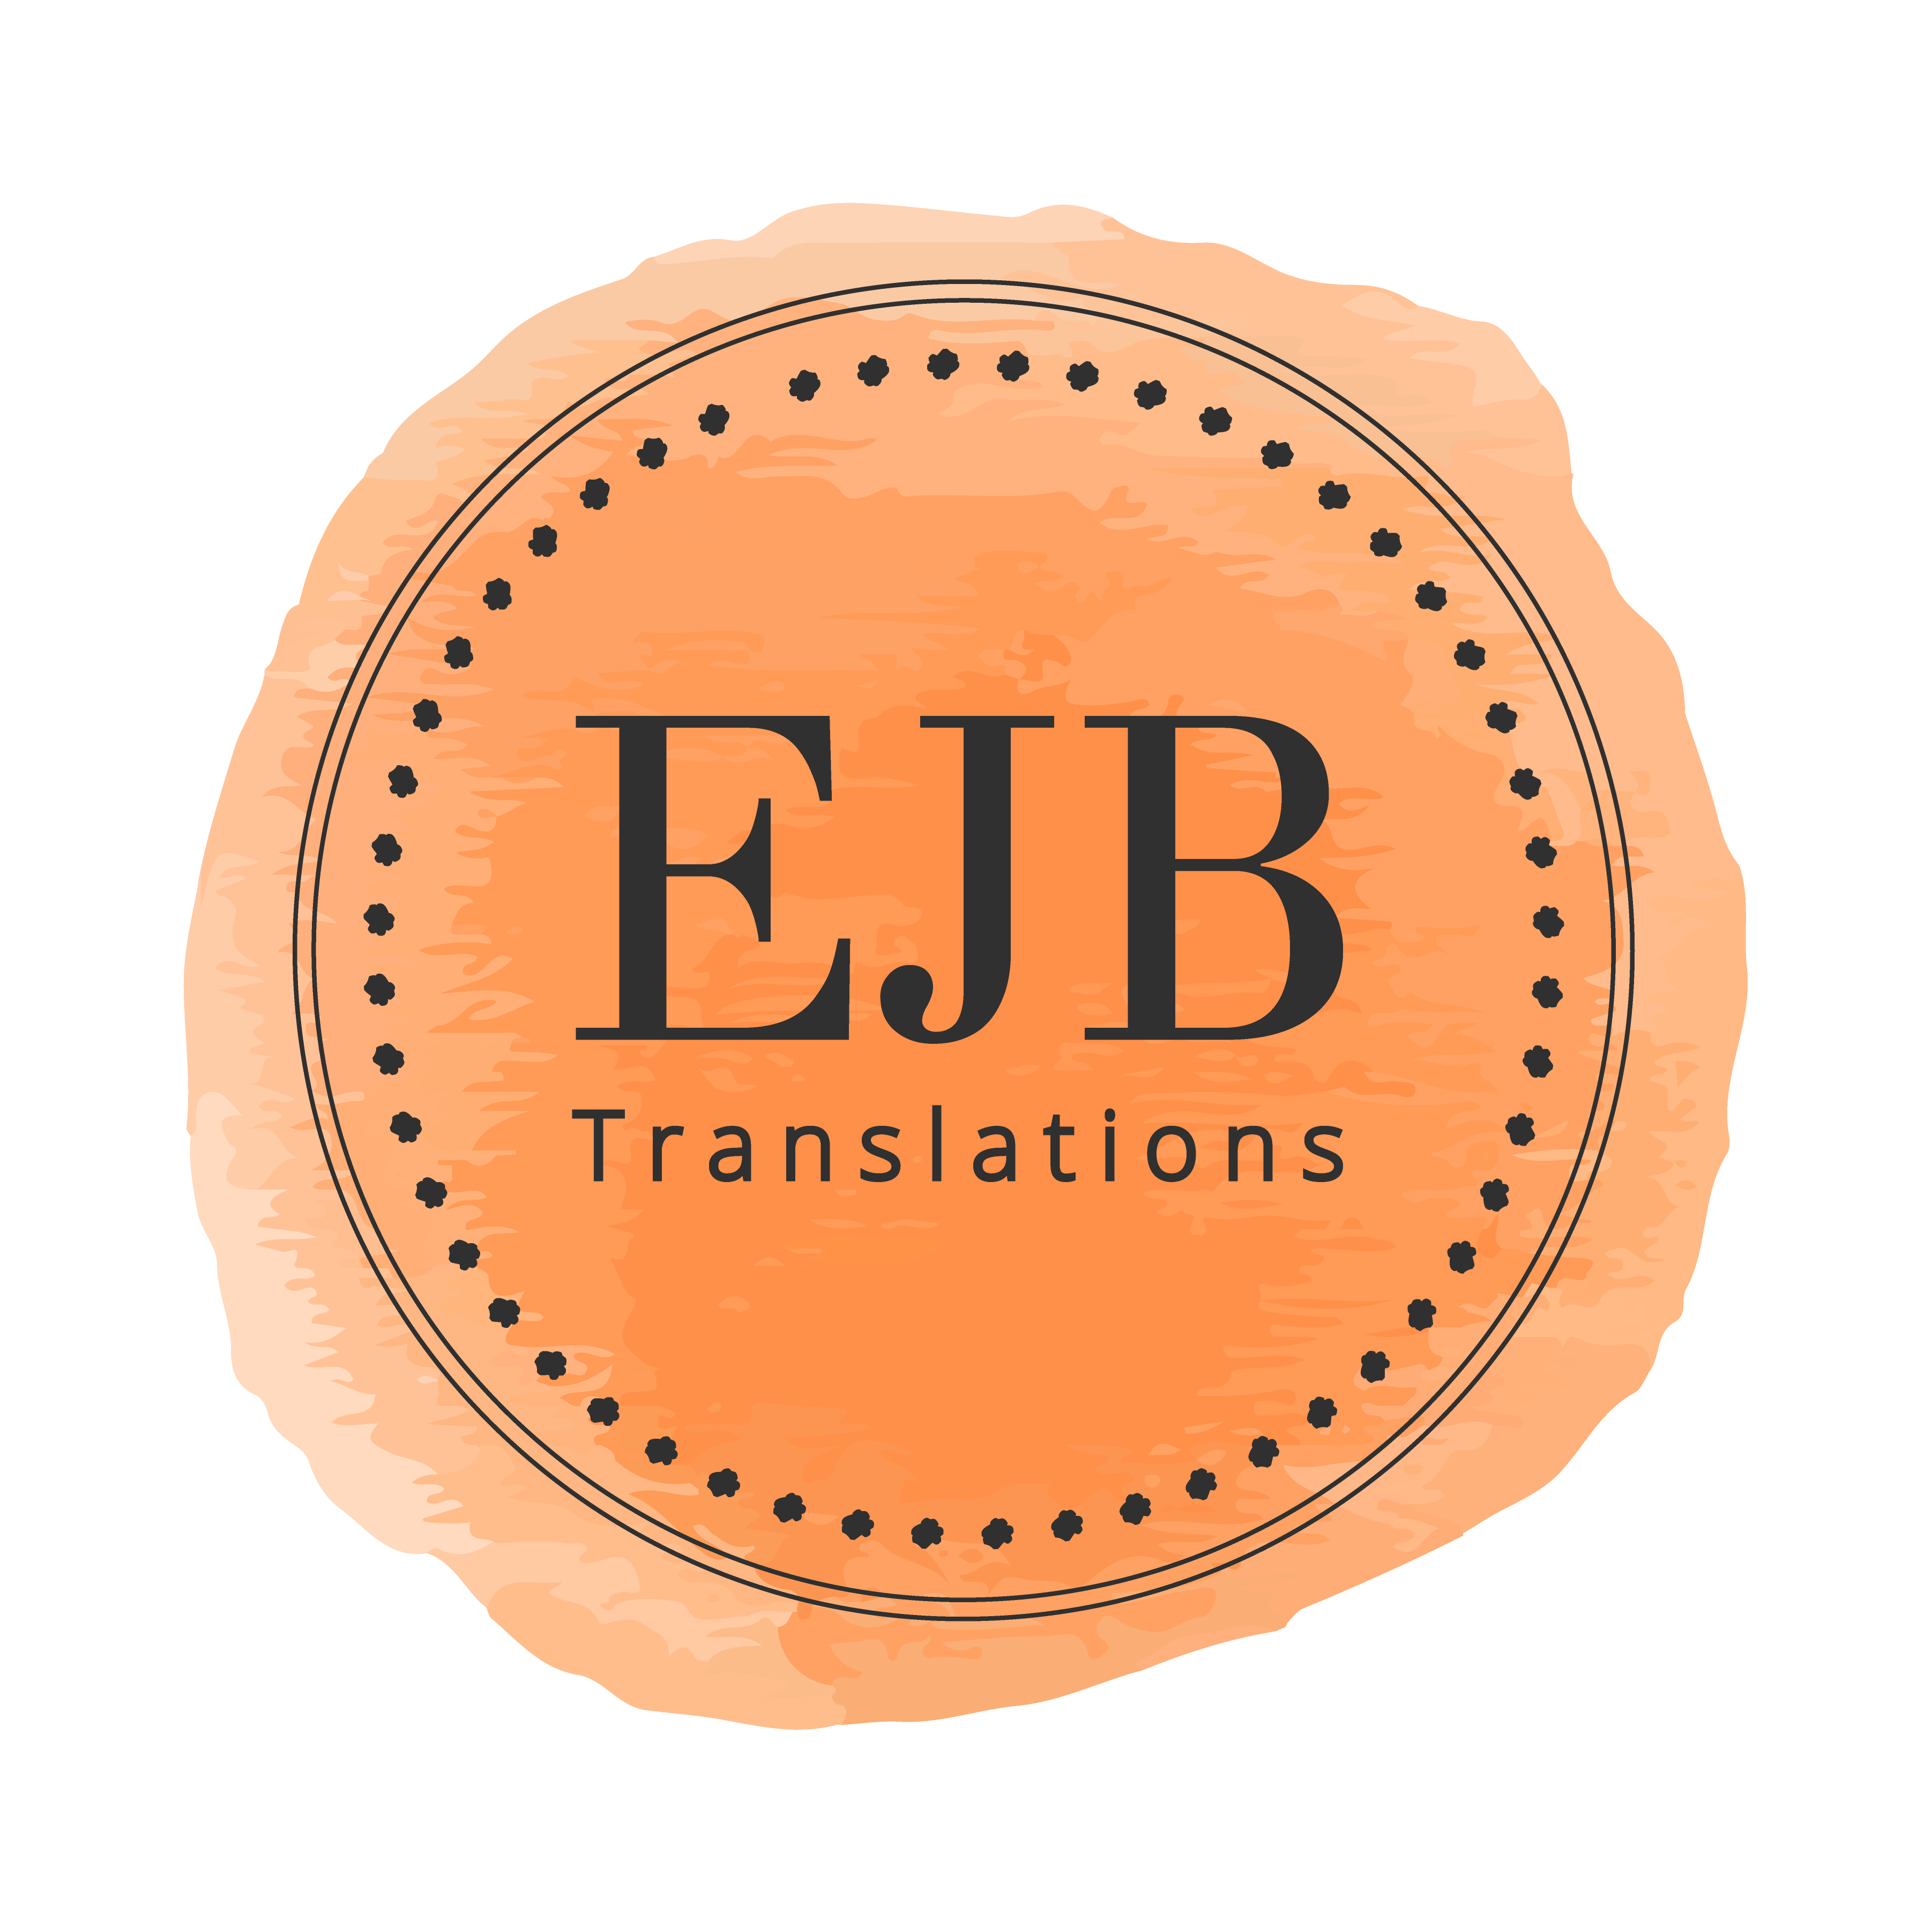 EJB Translations